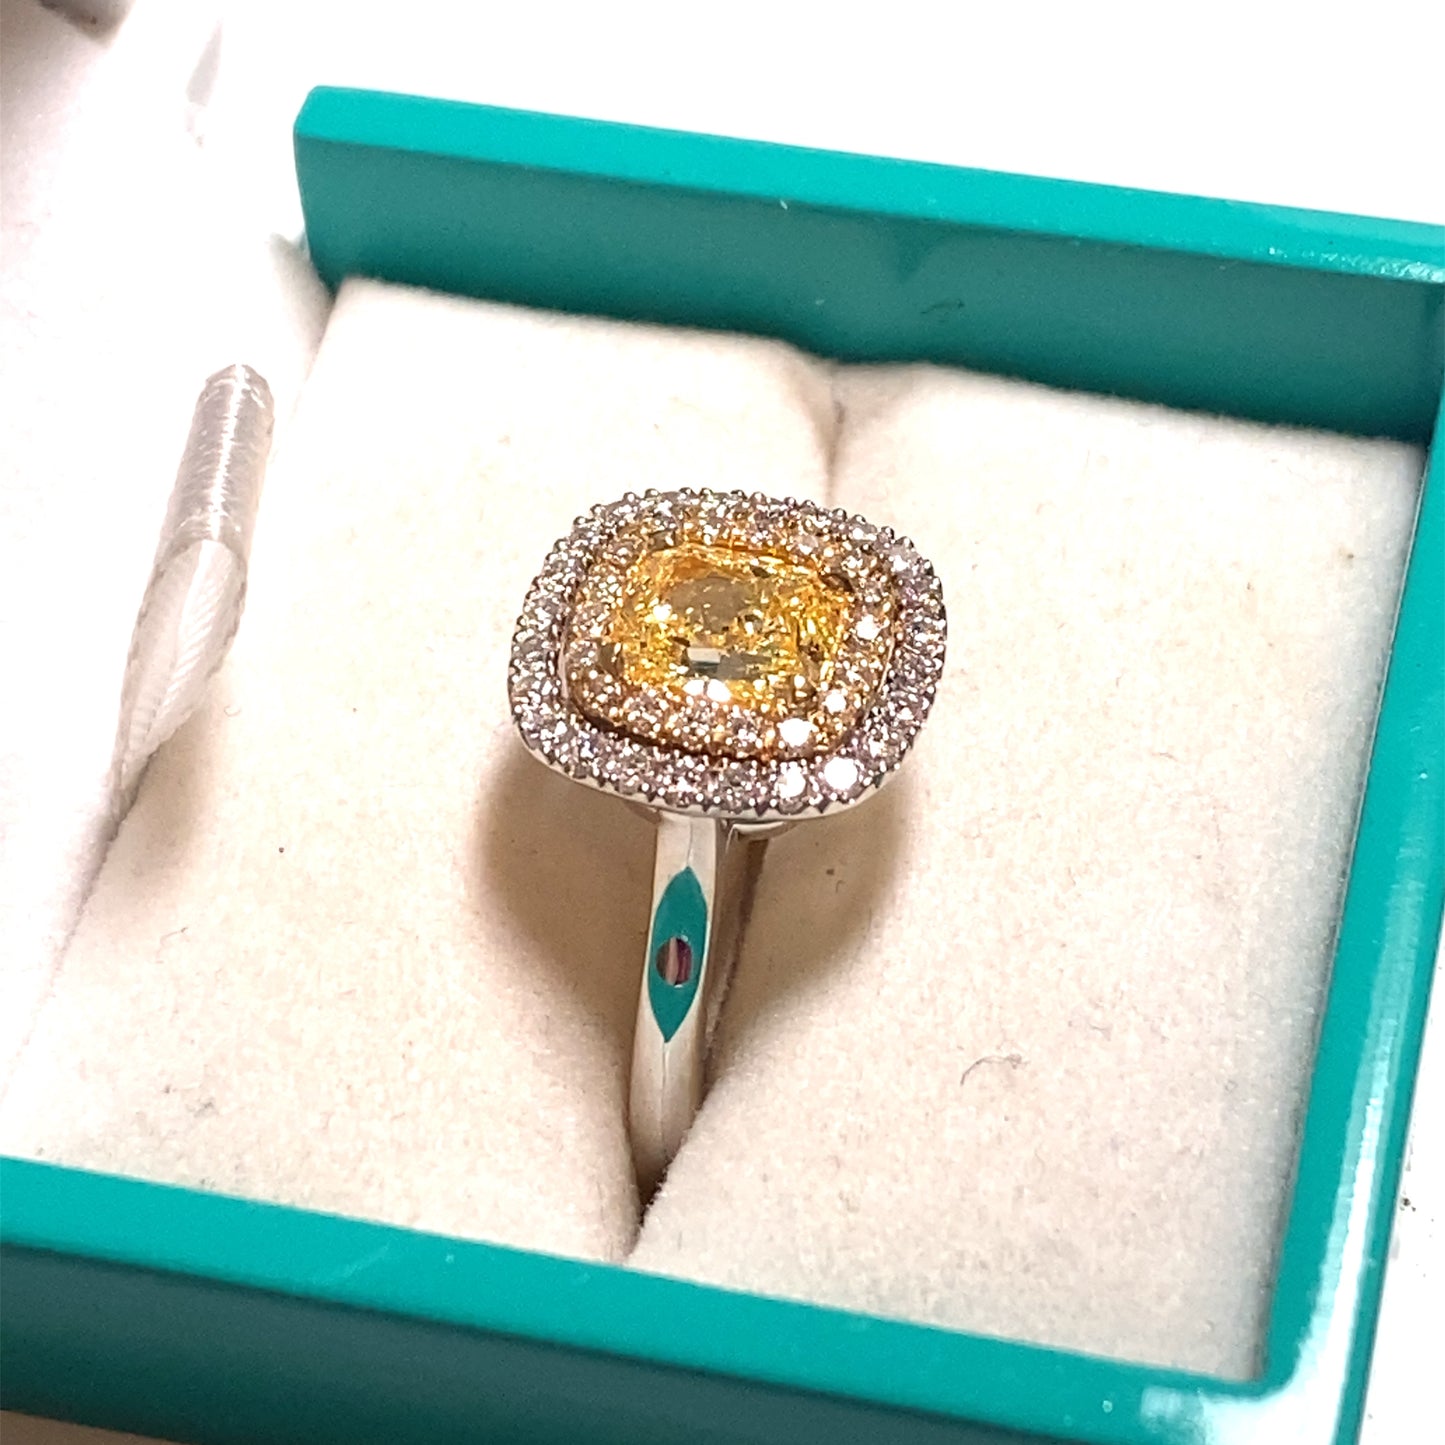 GIA Certified 1.56 Carat Fancy Light Yellow Diamond Ring in 18K White Gold